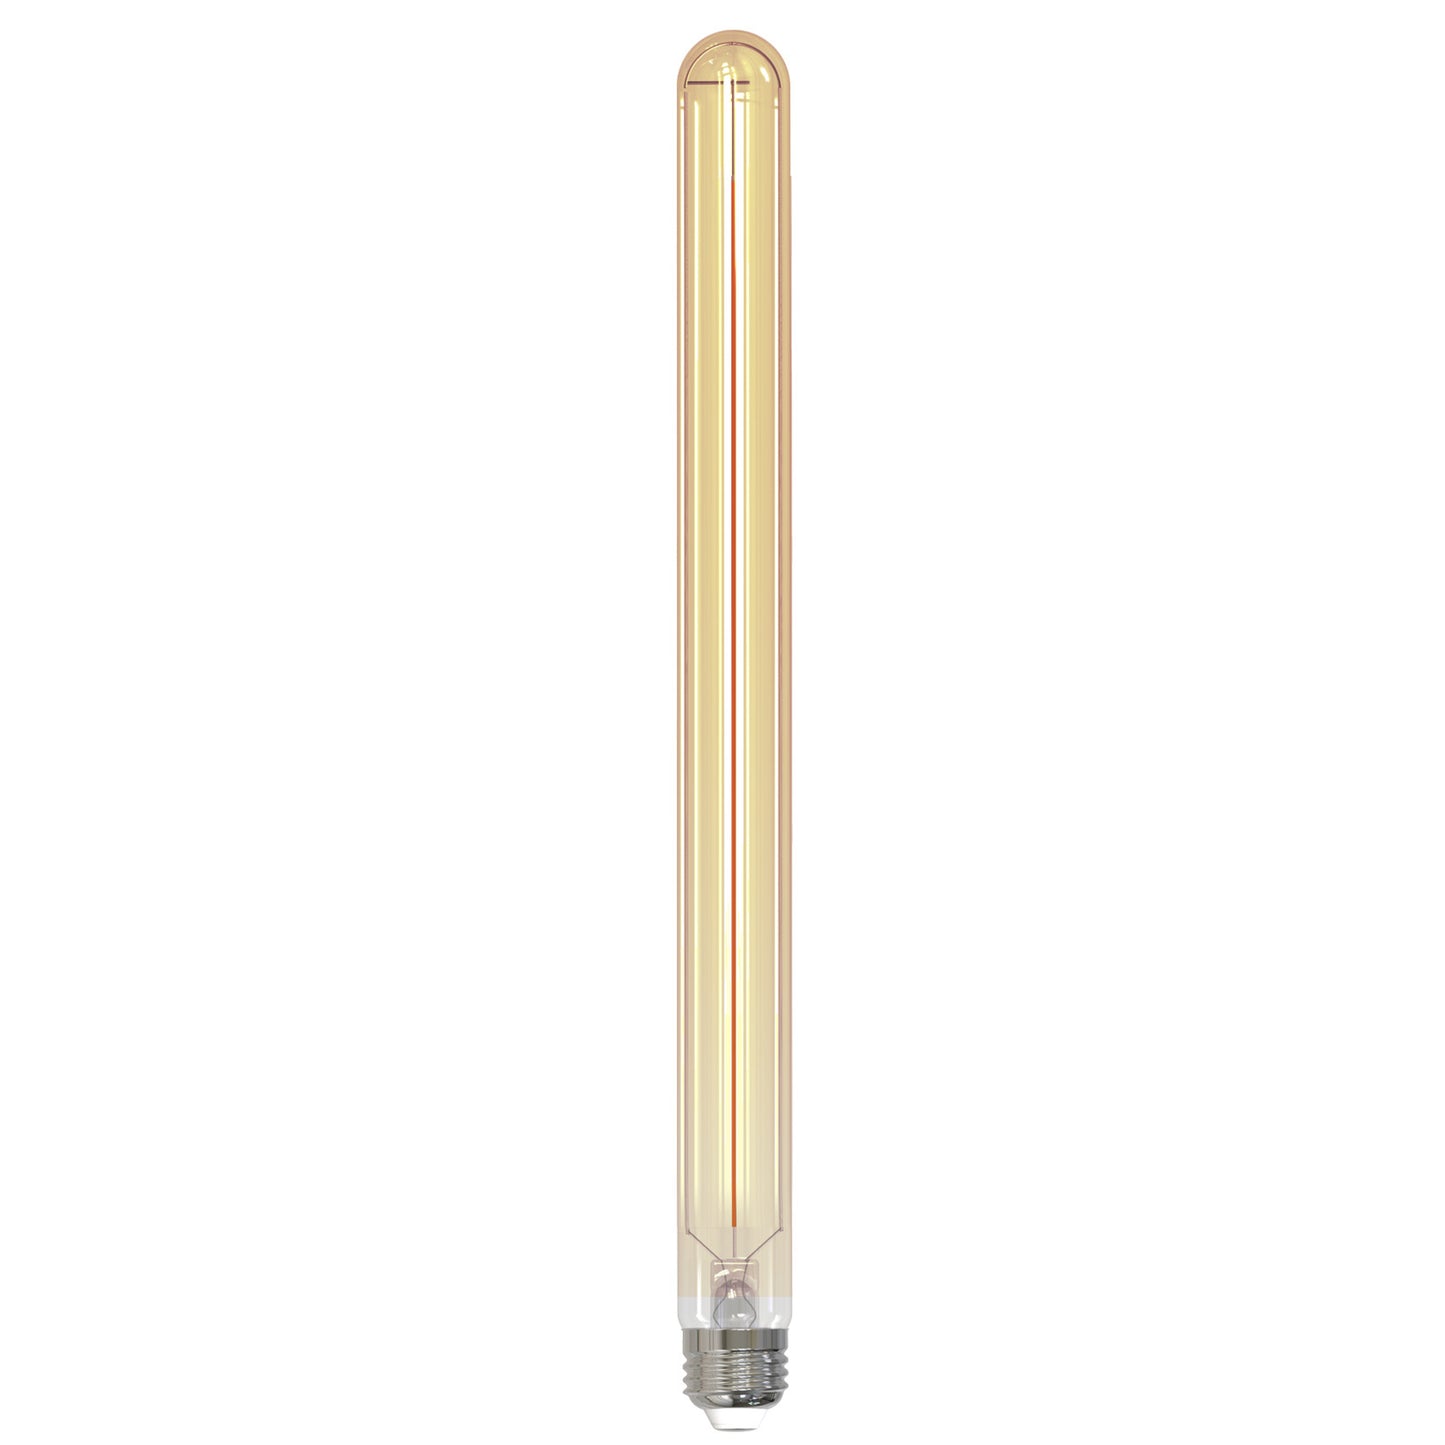 Bulbrite LED Filament 5 Watt Dimmable 15 Inch T9 Light Bulb with Antique Glass Finish and Medium (E26) Base - 2100K (Amber Light), 400 Lumens